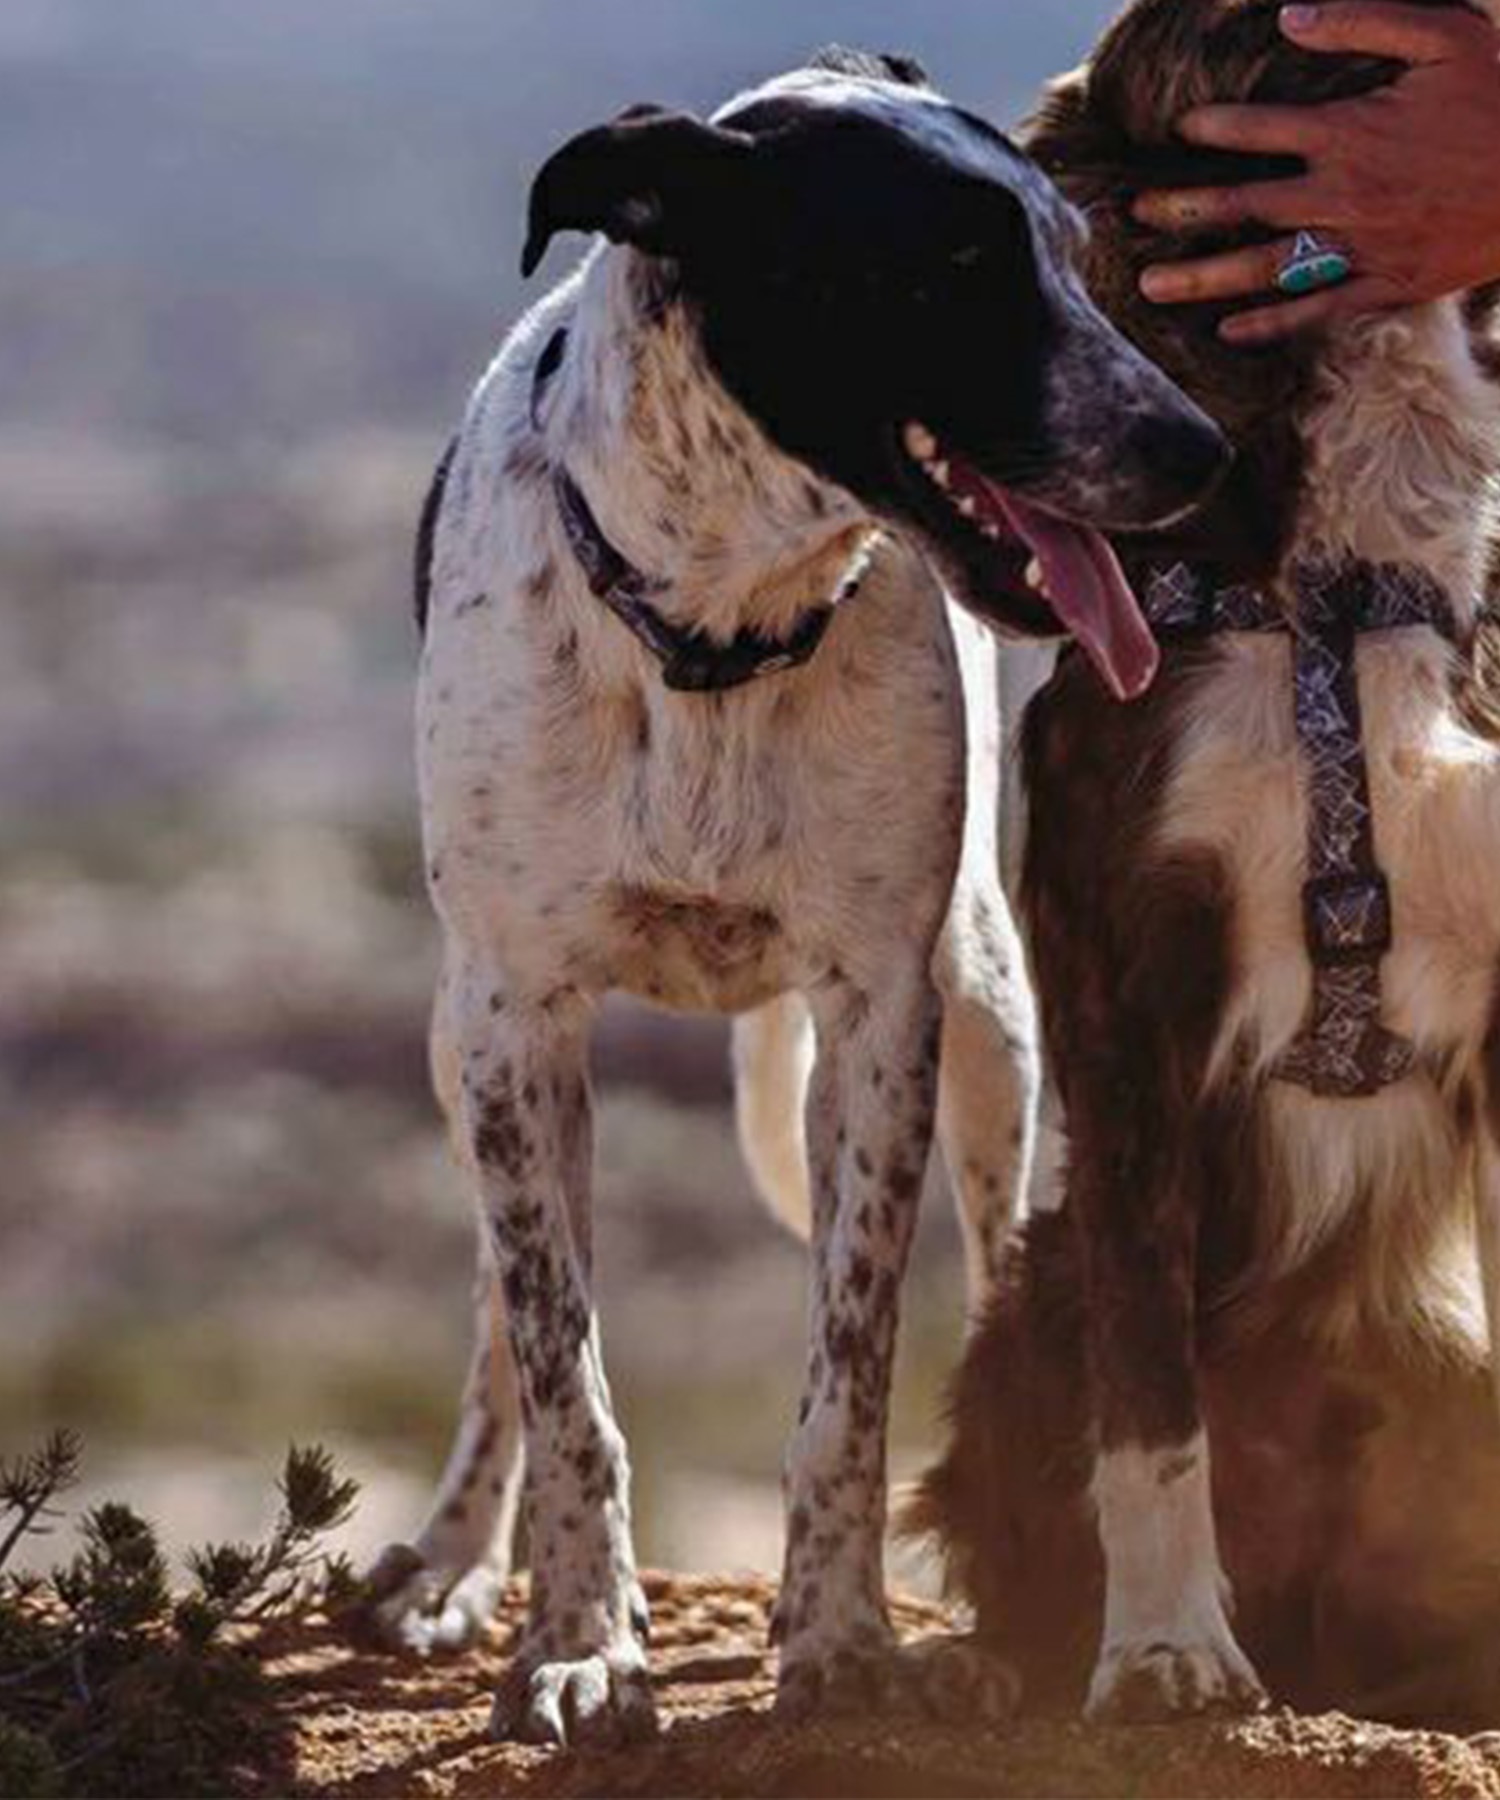 WOLFGANG ウルフギャング 犬用 首輪 WolfMountain Collar Sサイズ 超小型犬用 小型犬用 ウルフマウンテン カラー グレー系 WC-001-83(GY-S)